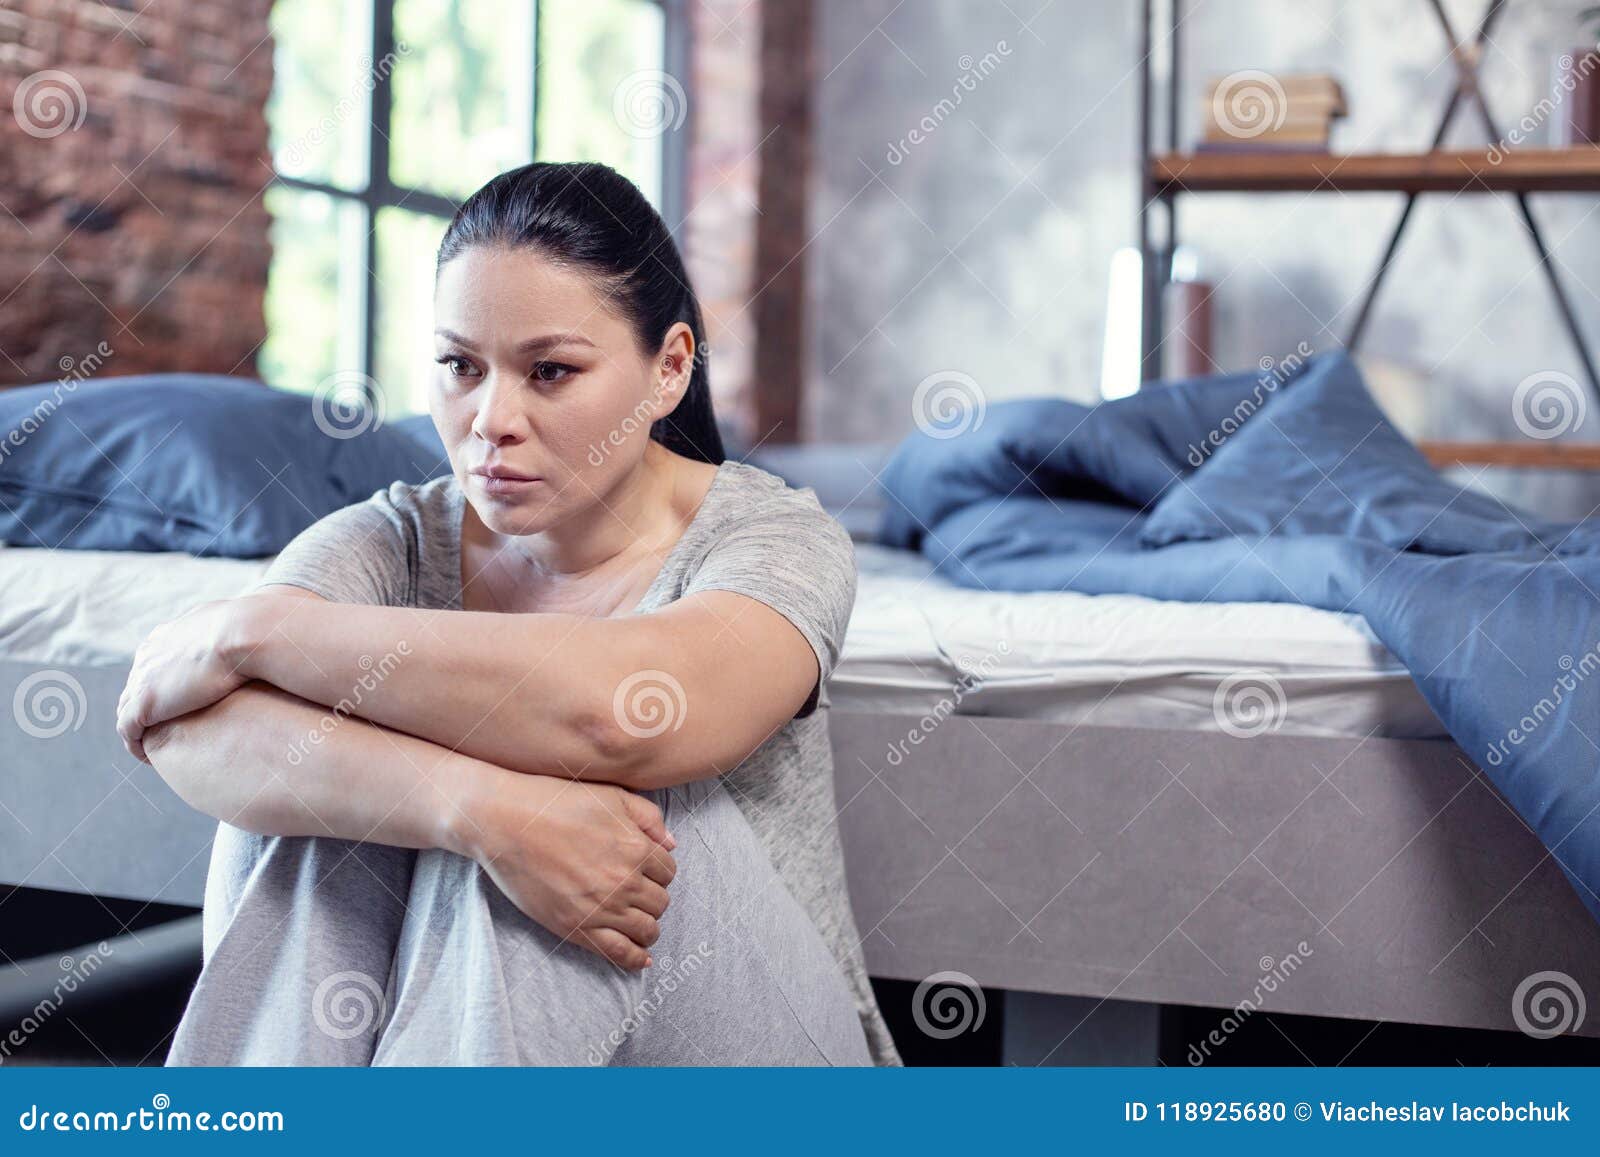 depressed attractive woman having sleep disorder